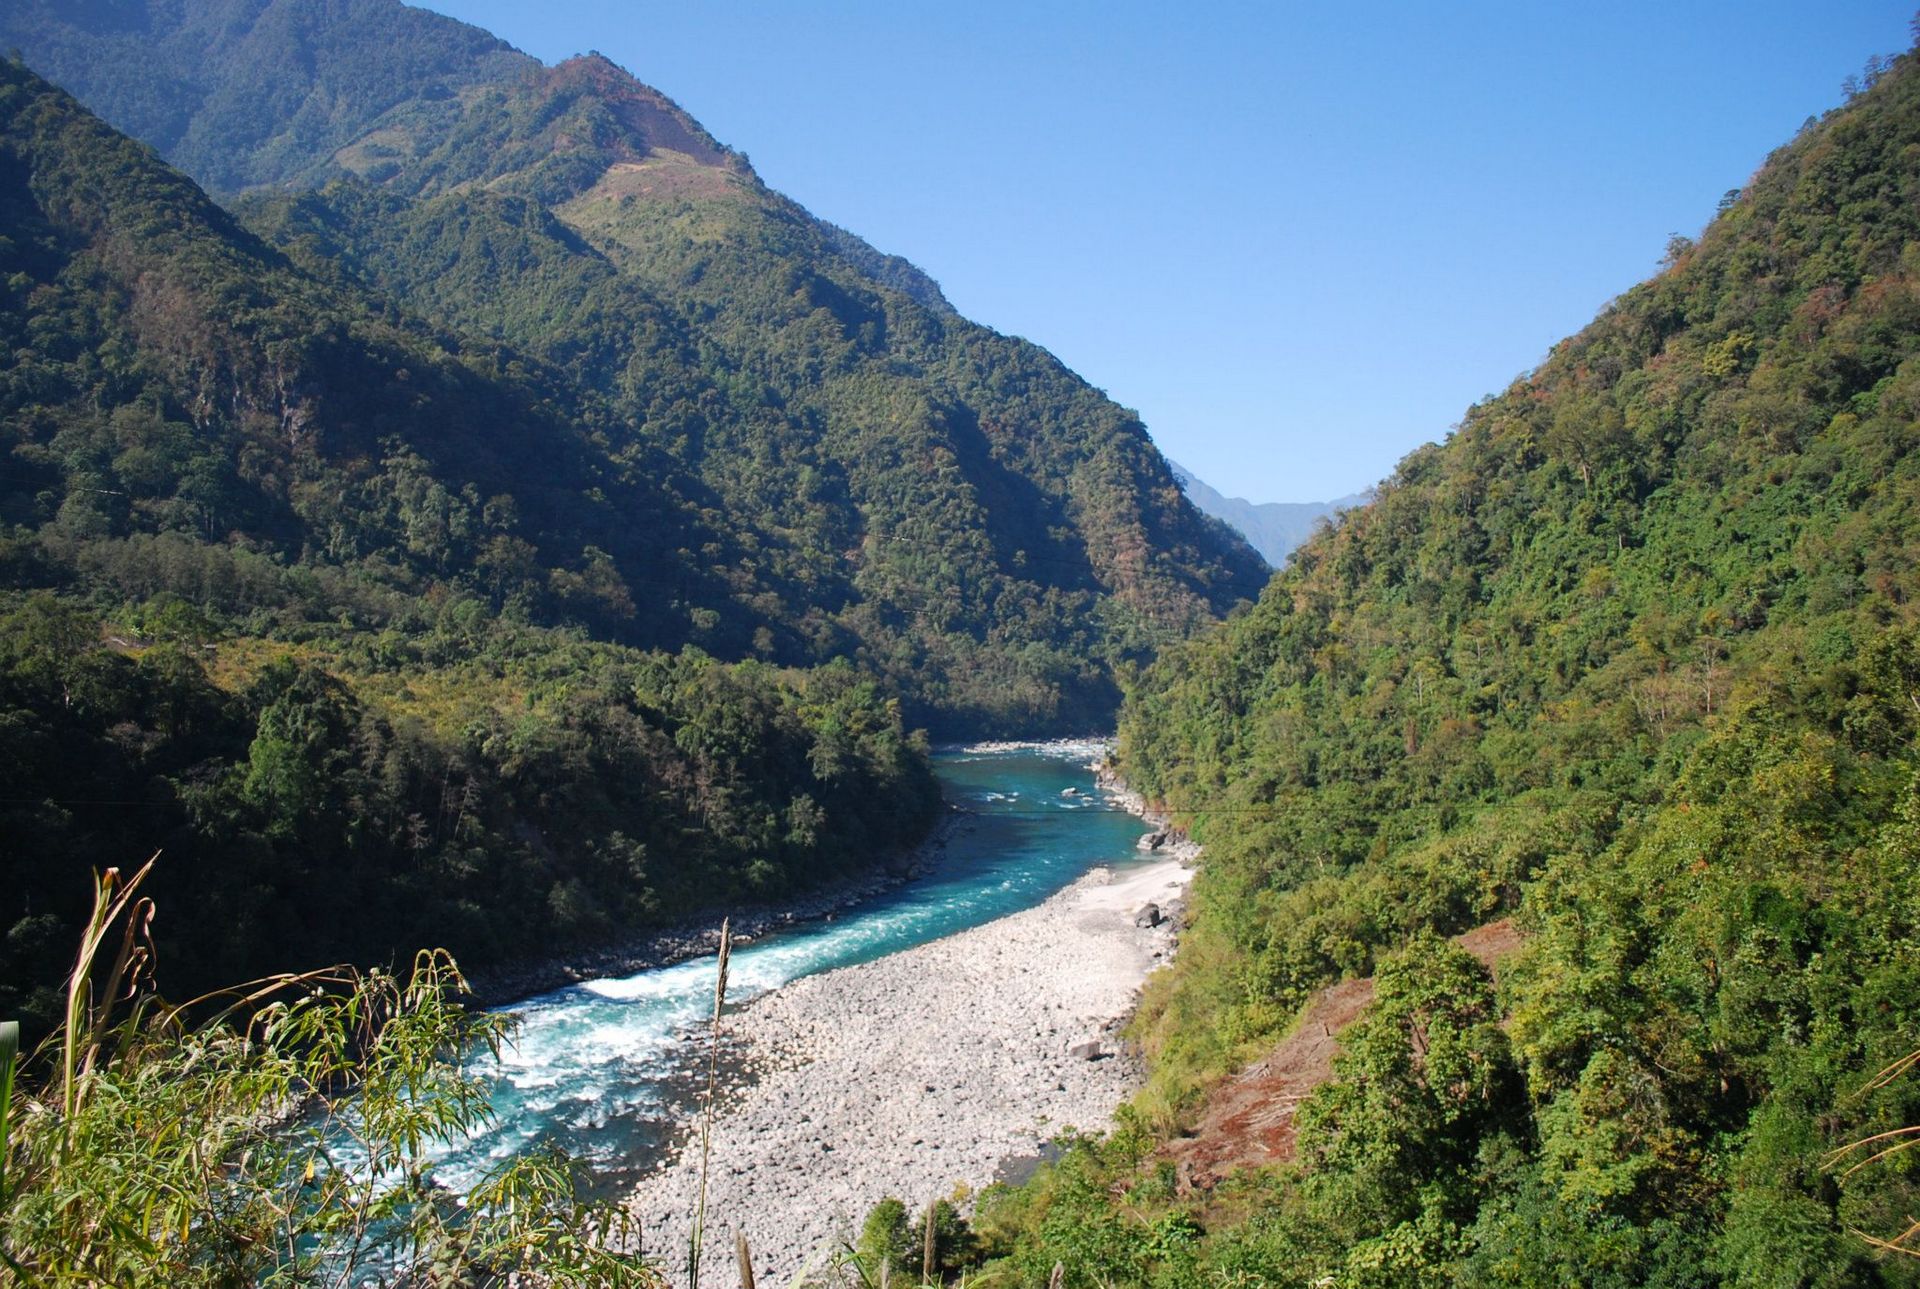 Lohit River in Arunachal Pradesh